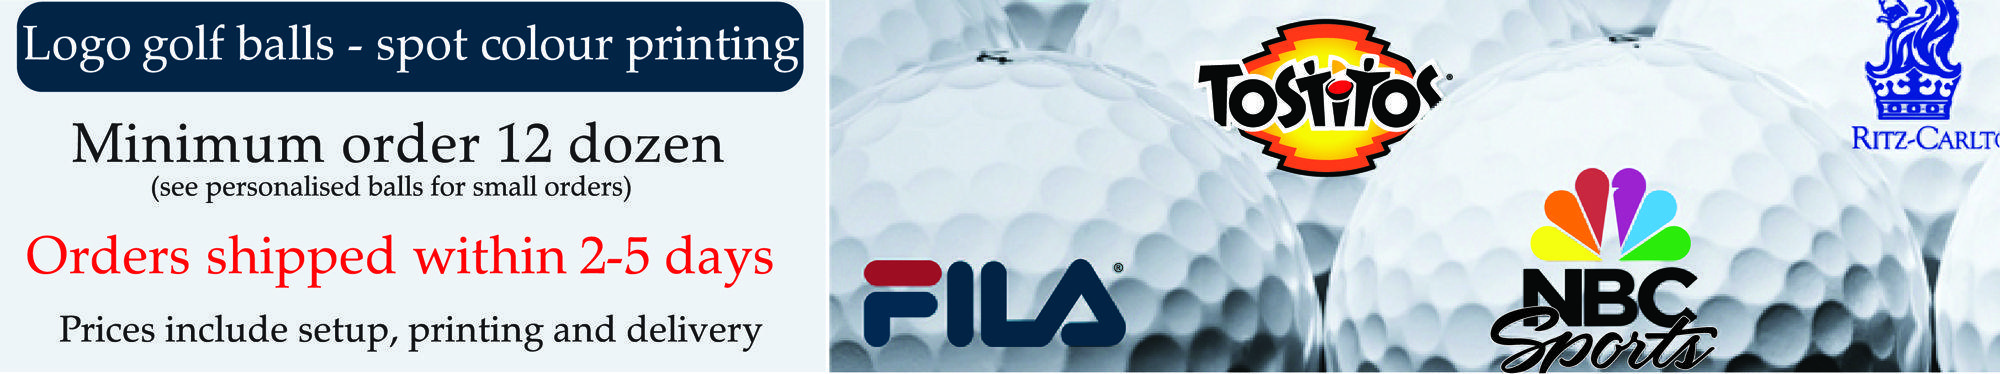 TaylorMade Logo - TaylorMade Logo Golf Balls